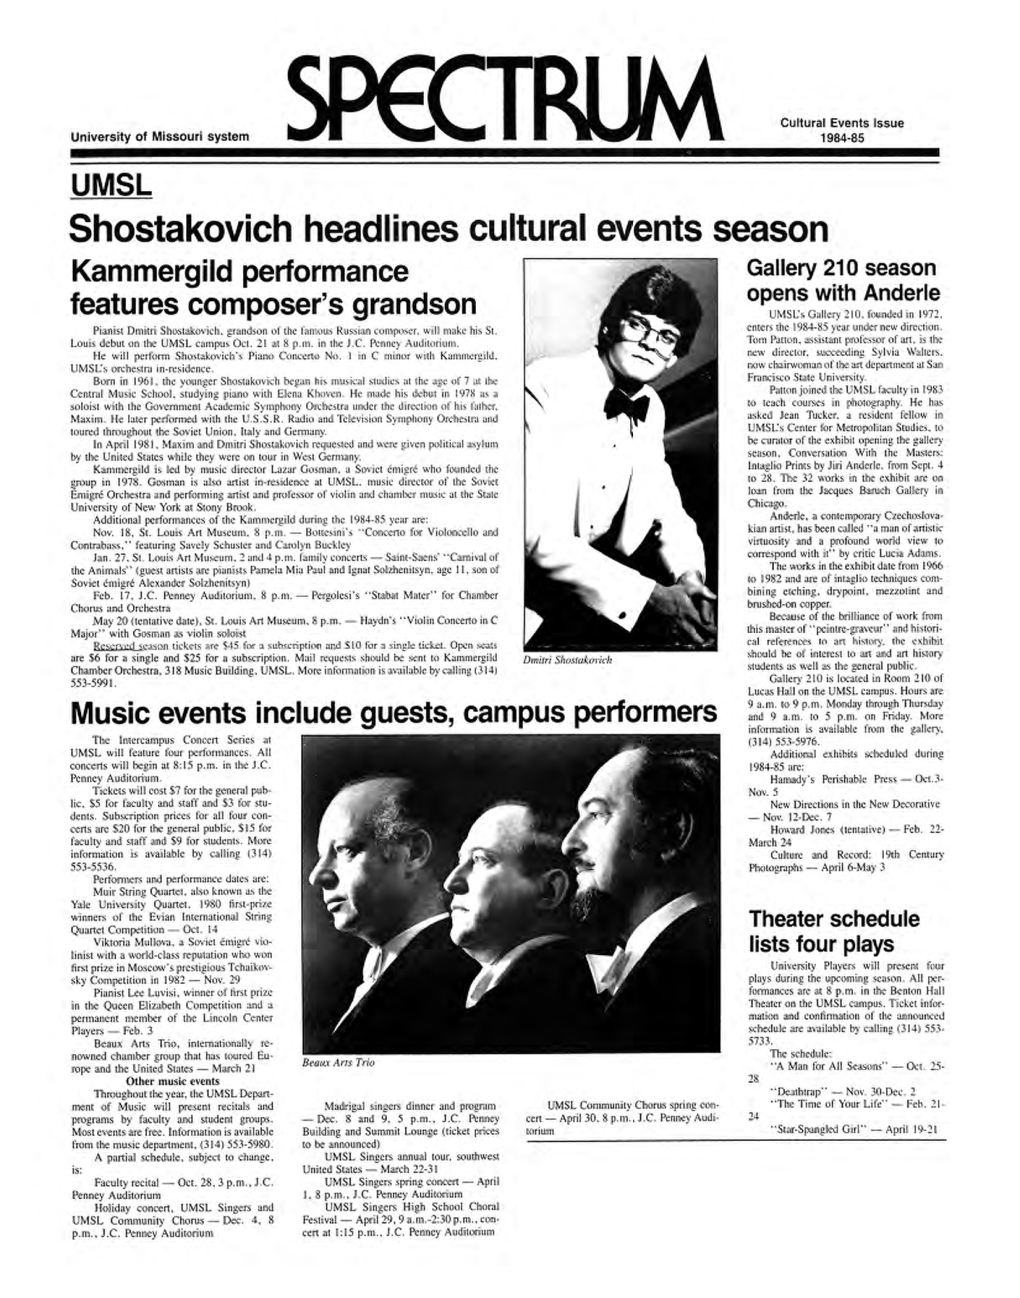 Shostakovich Headlines Cultural Events Season